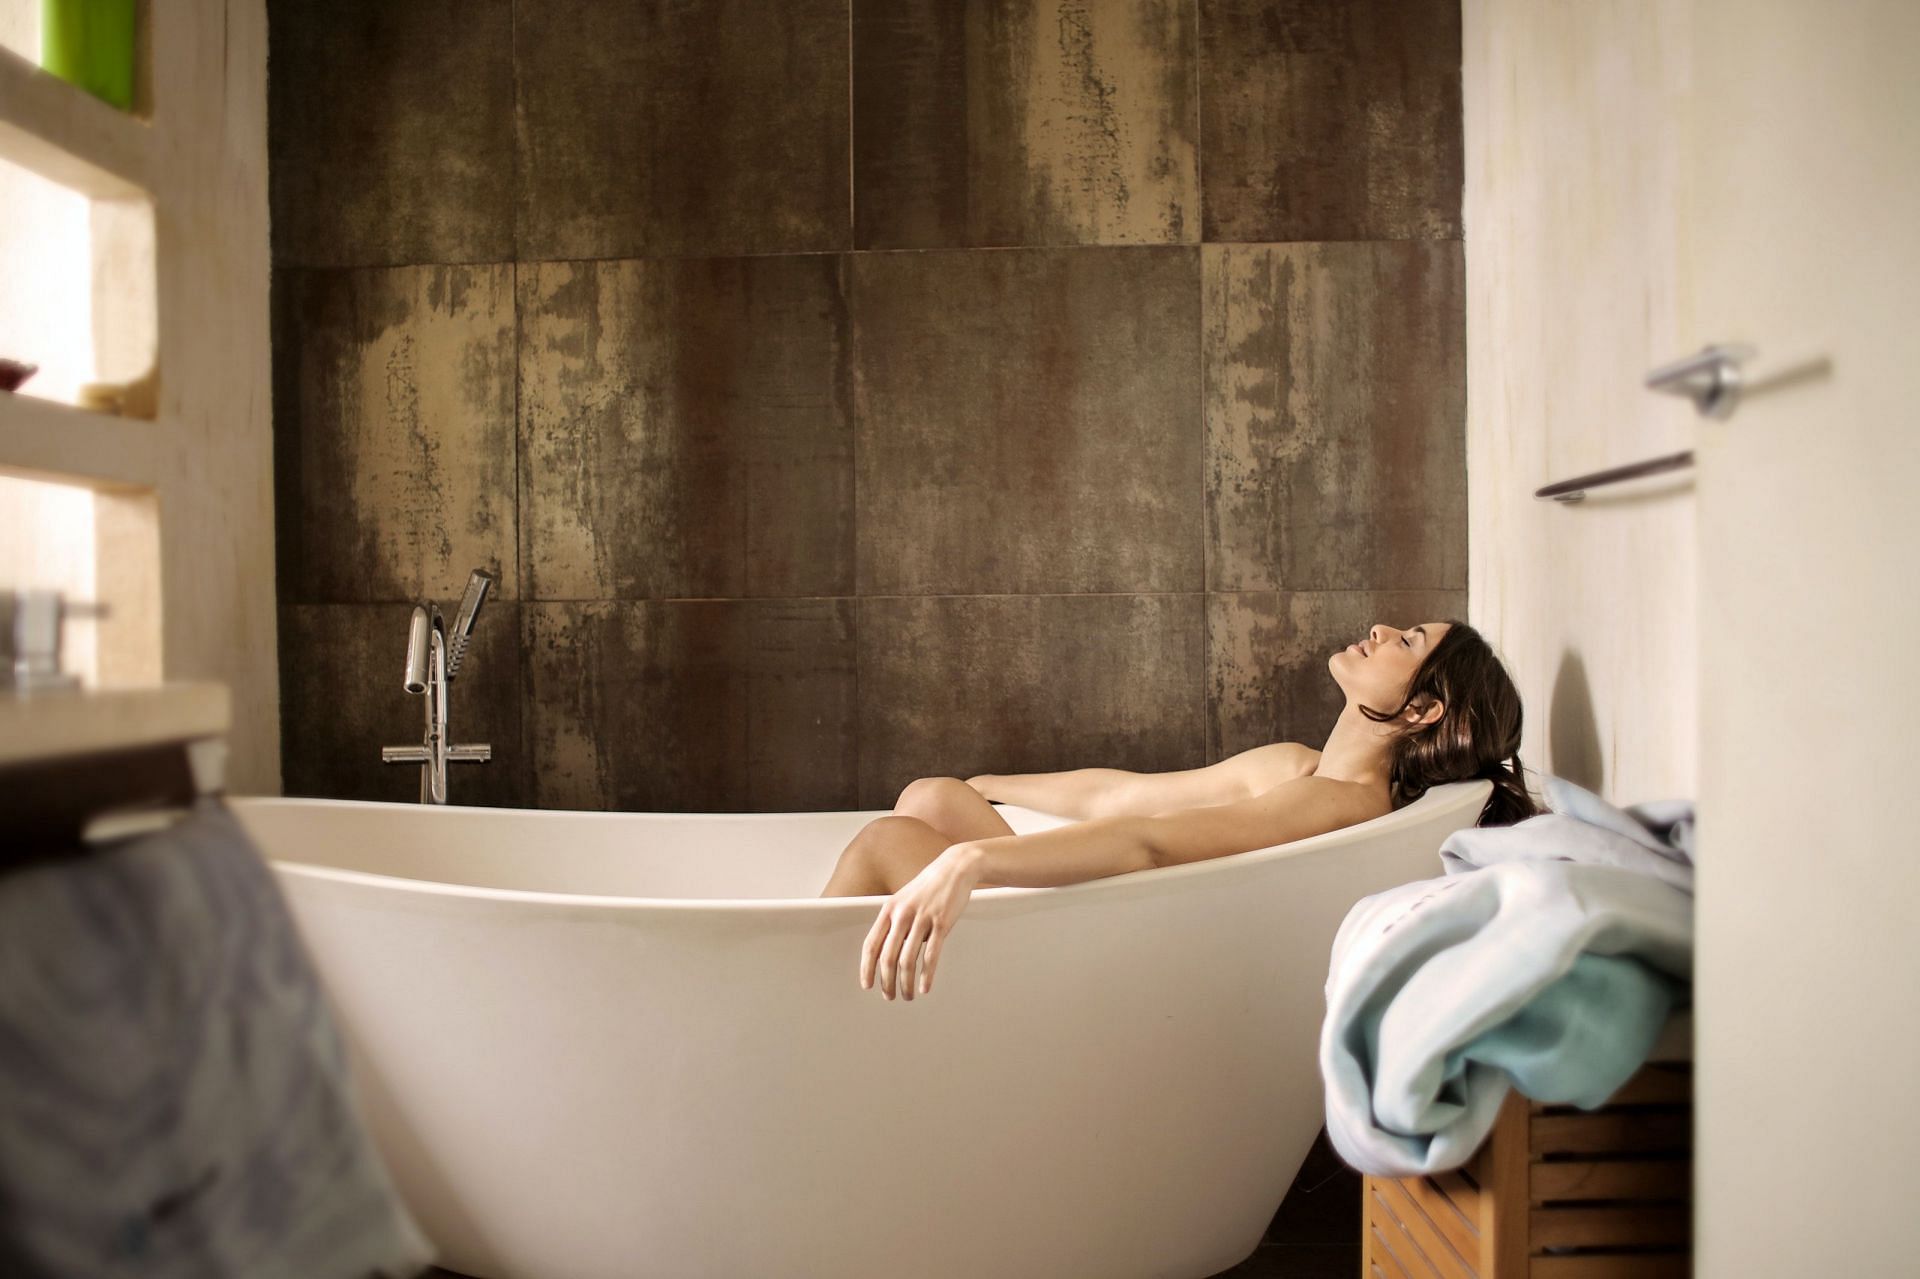 Ice baths help improve your sleep and boosts immune health. (Image via Pexels / Andrea Piacquadio)